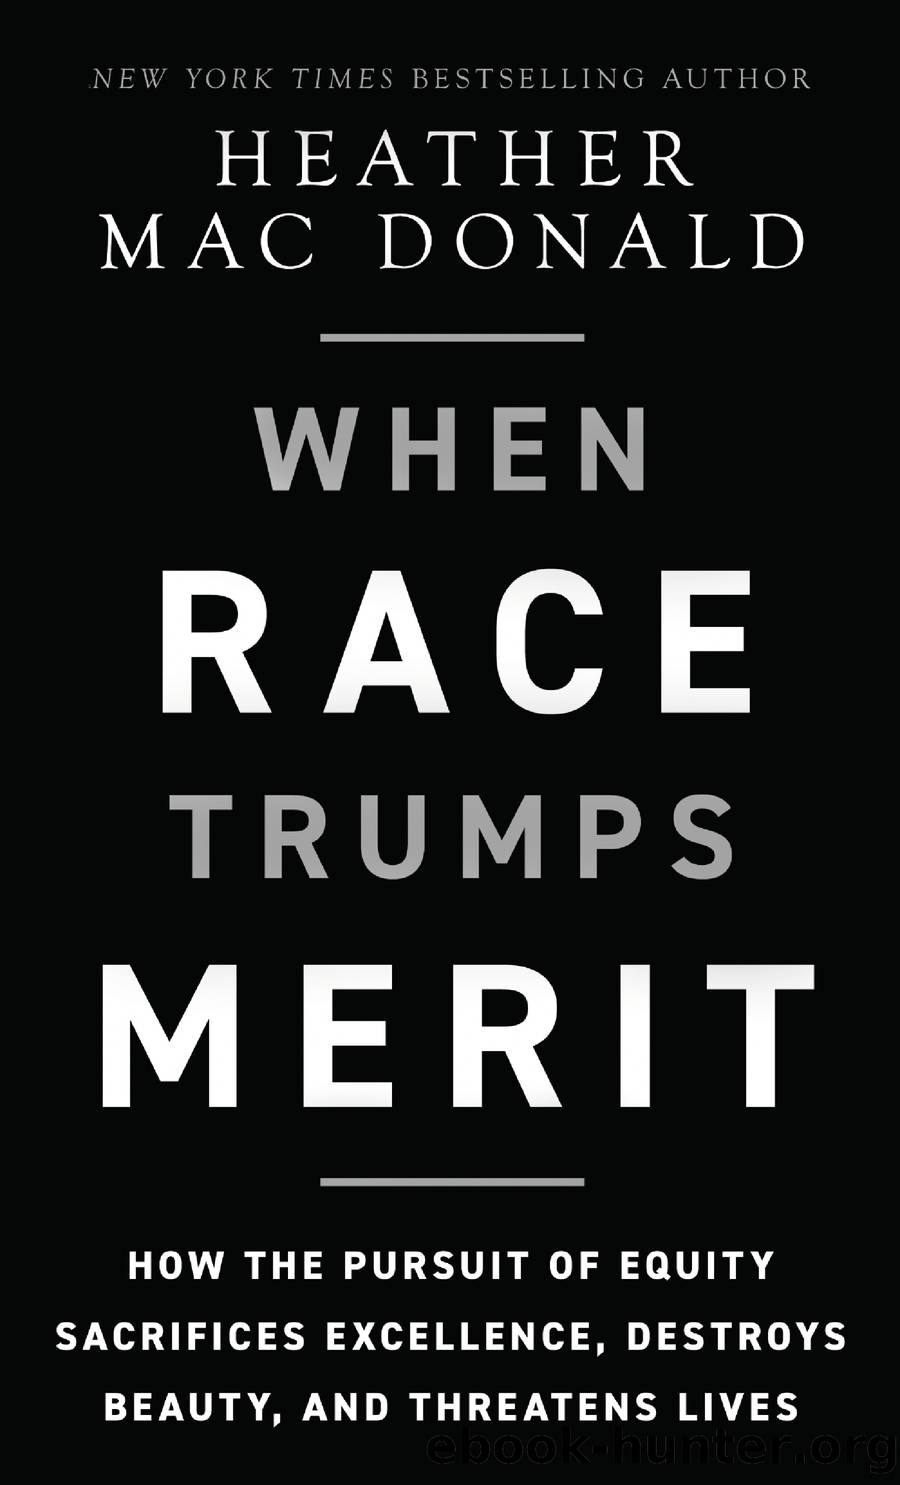 When Race Trumps Merit by Heather Mac Donald